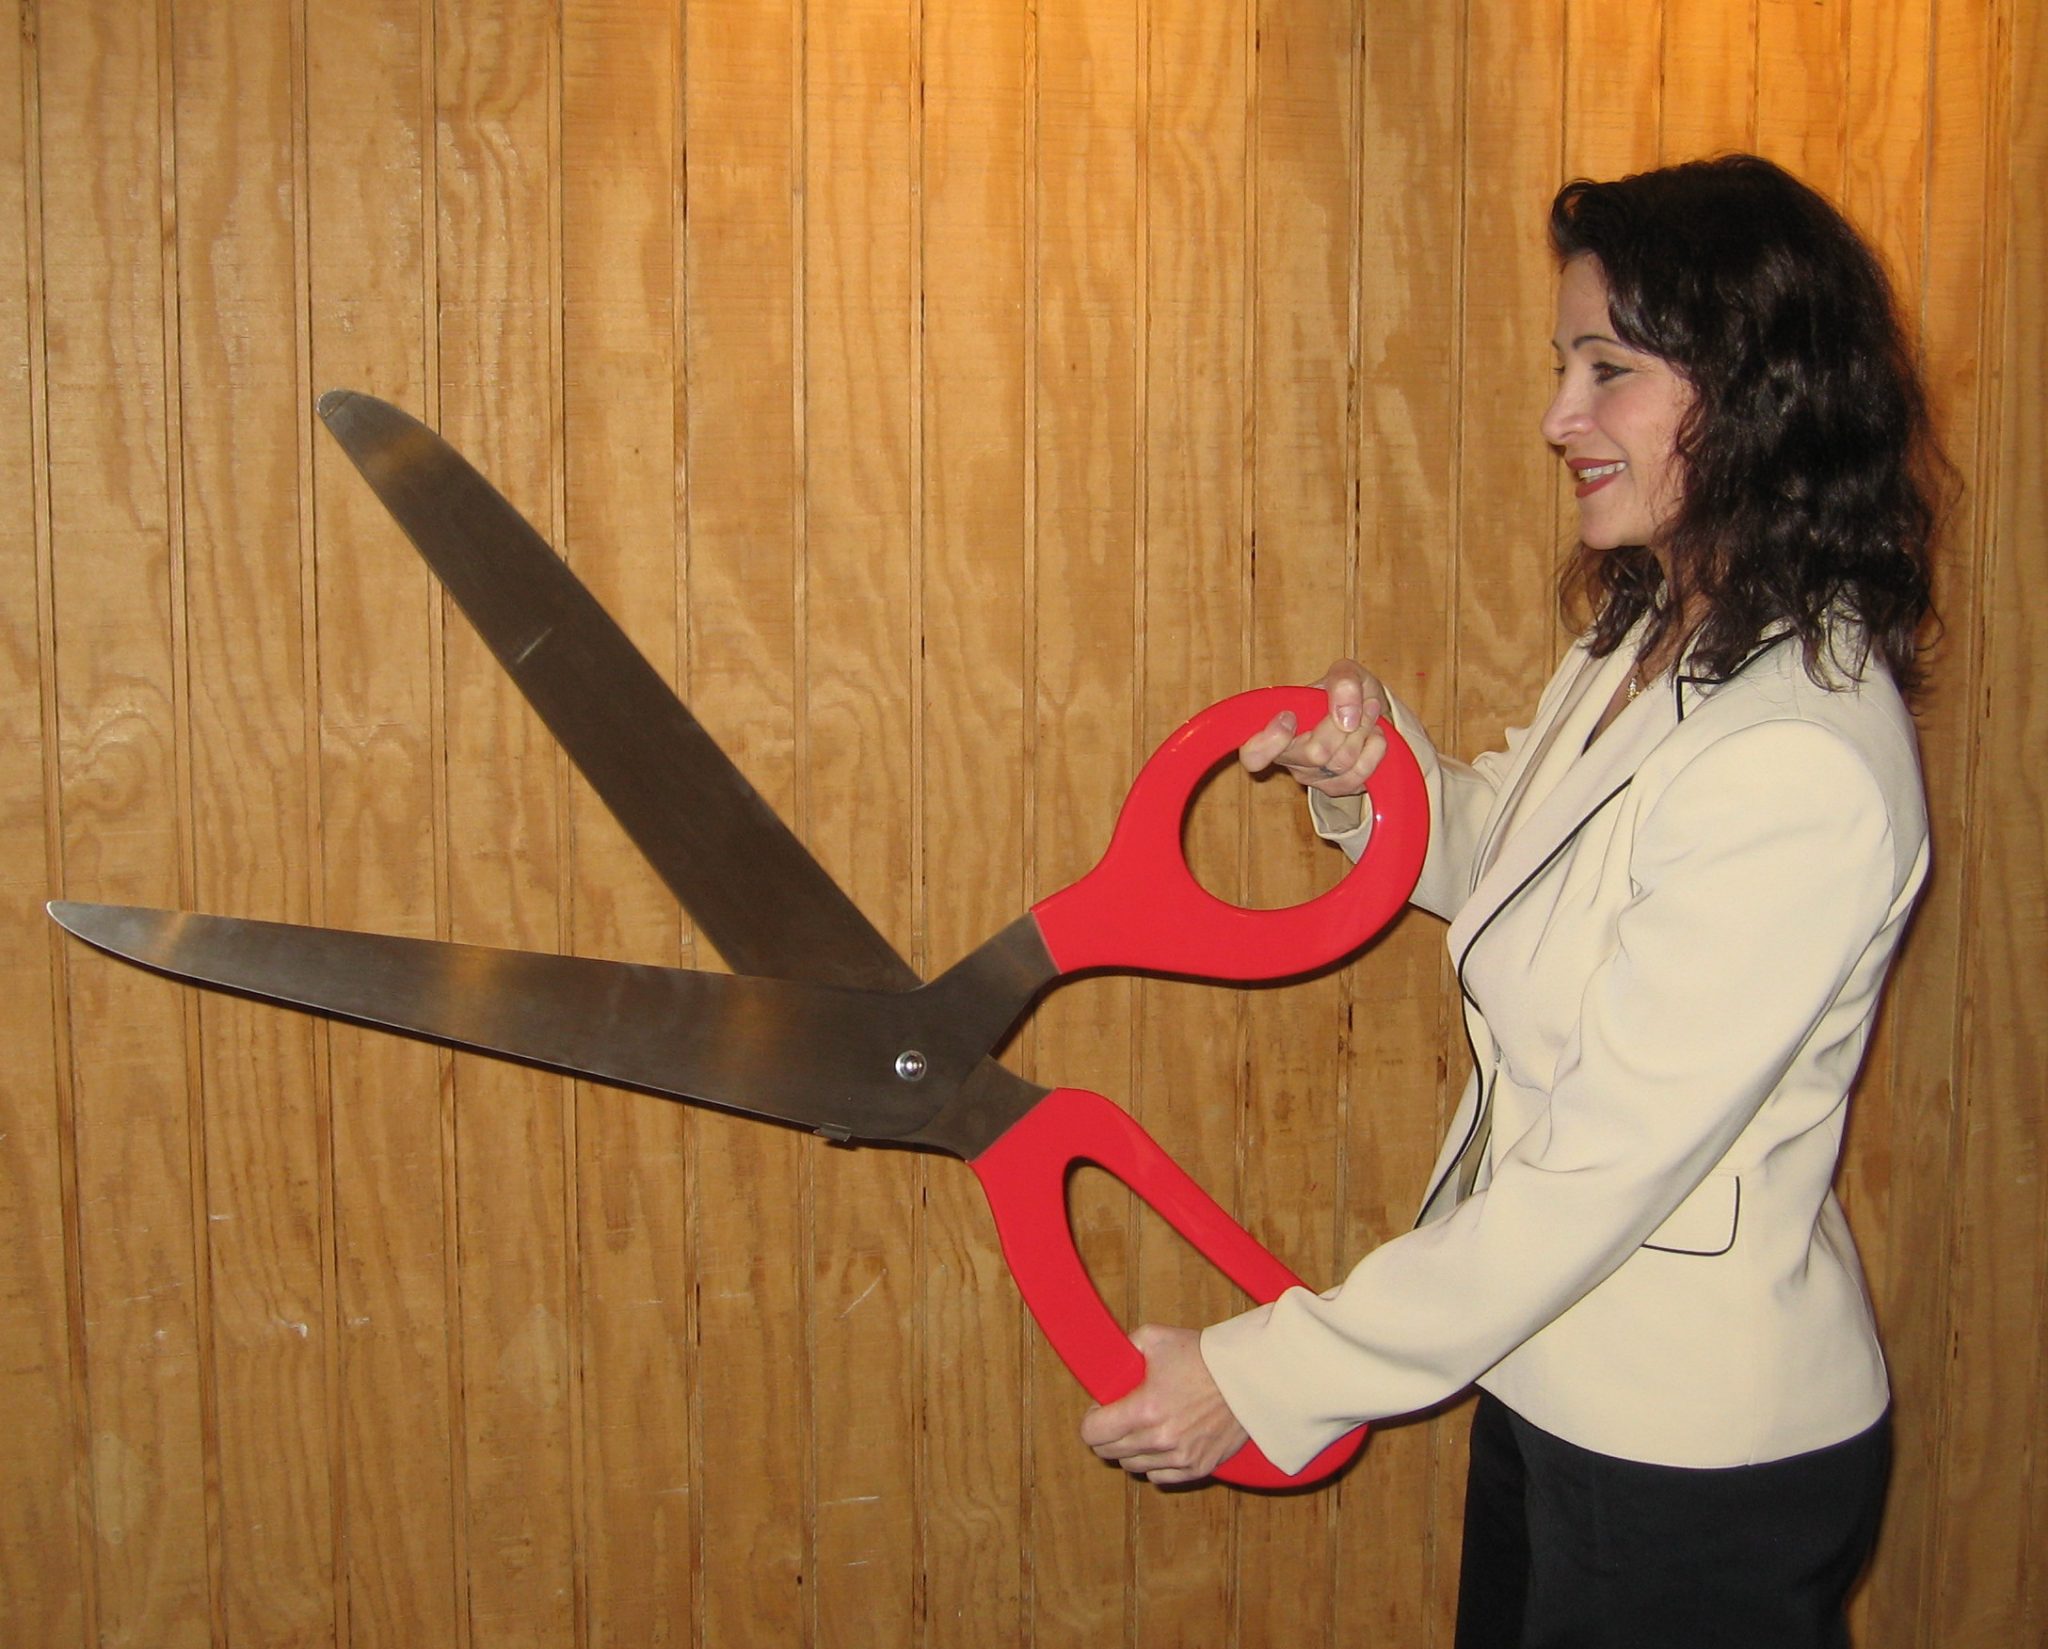 where can i buy giant scissors